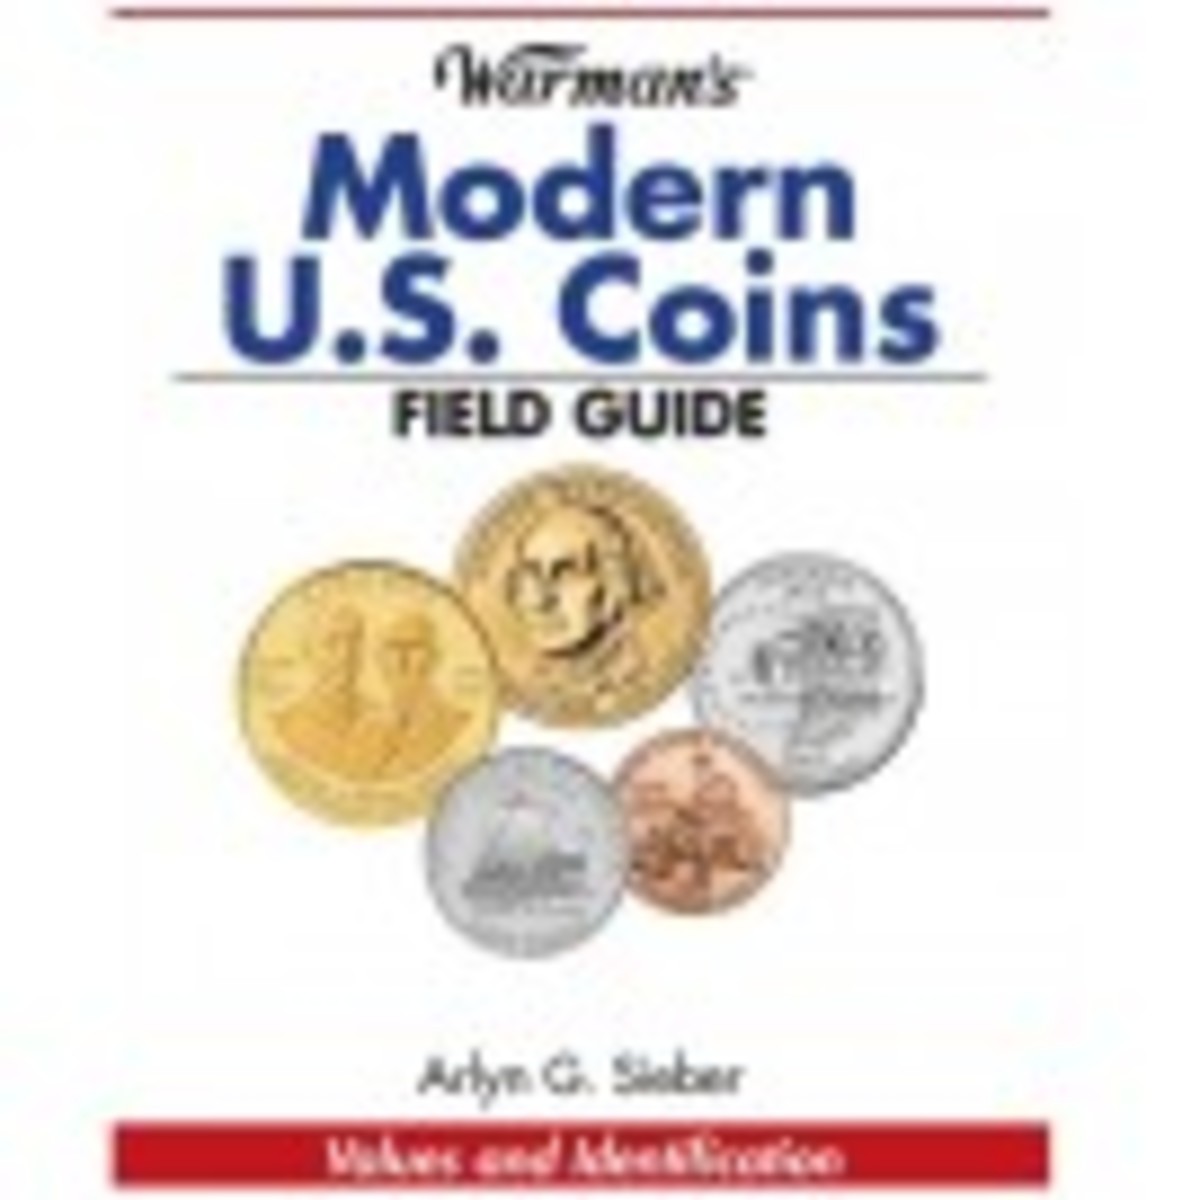 Warman's Modern U.S. Coins Field Guide